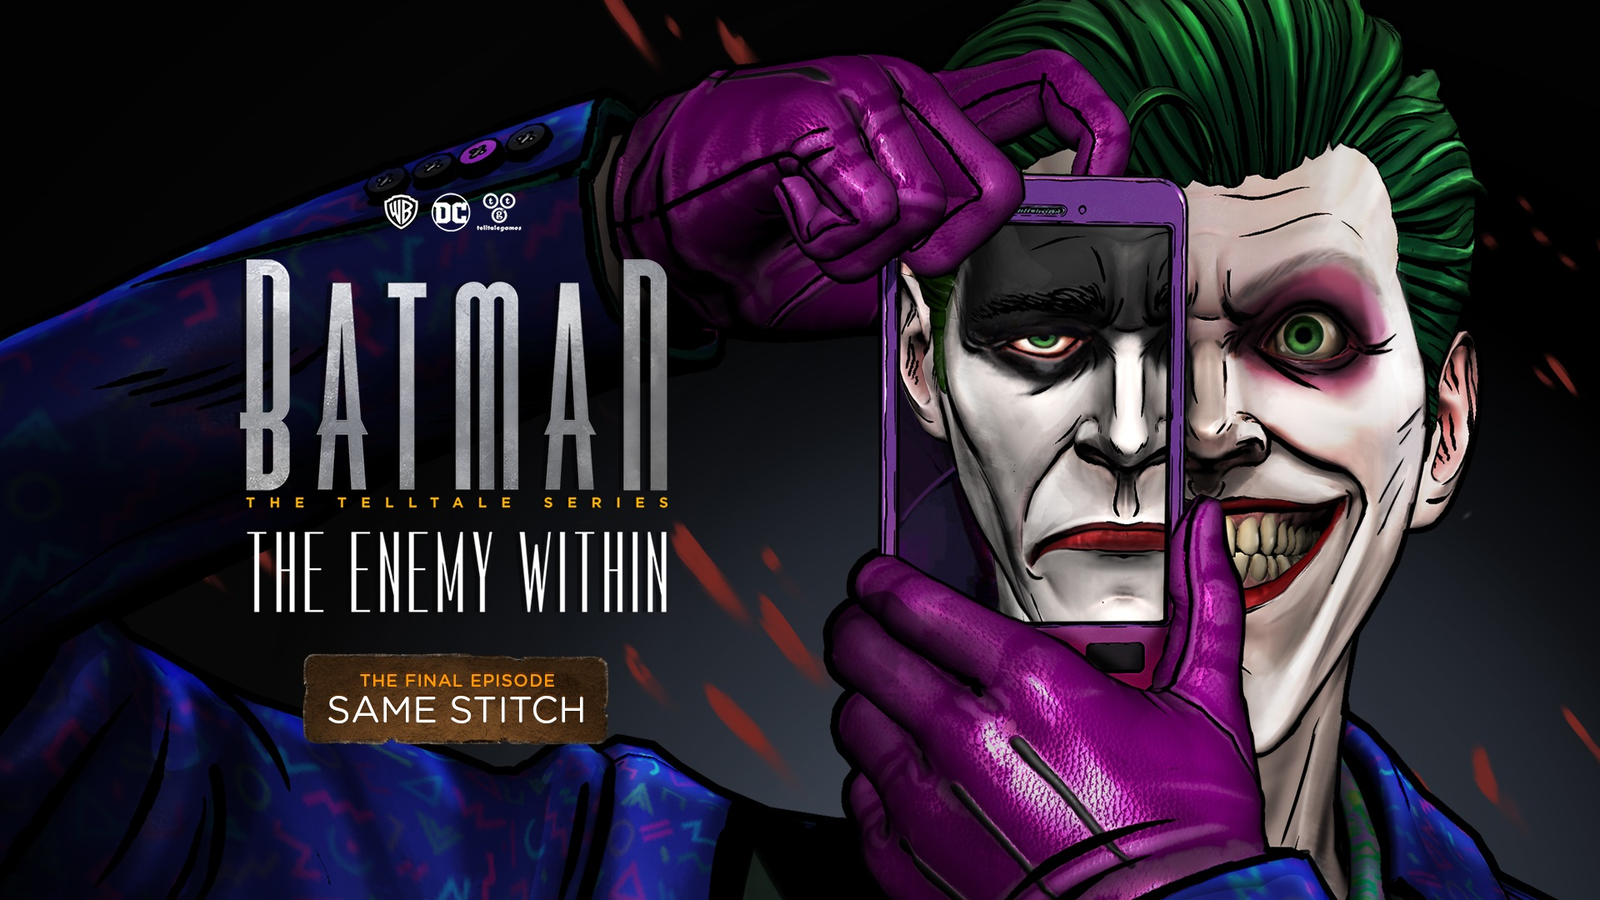 Captain Price Vs Joker - Modern Warfare 3 Joker Mod 